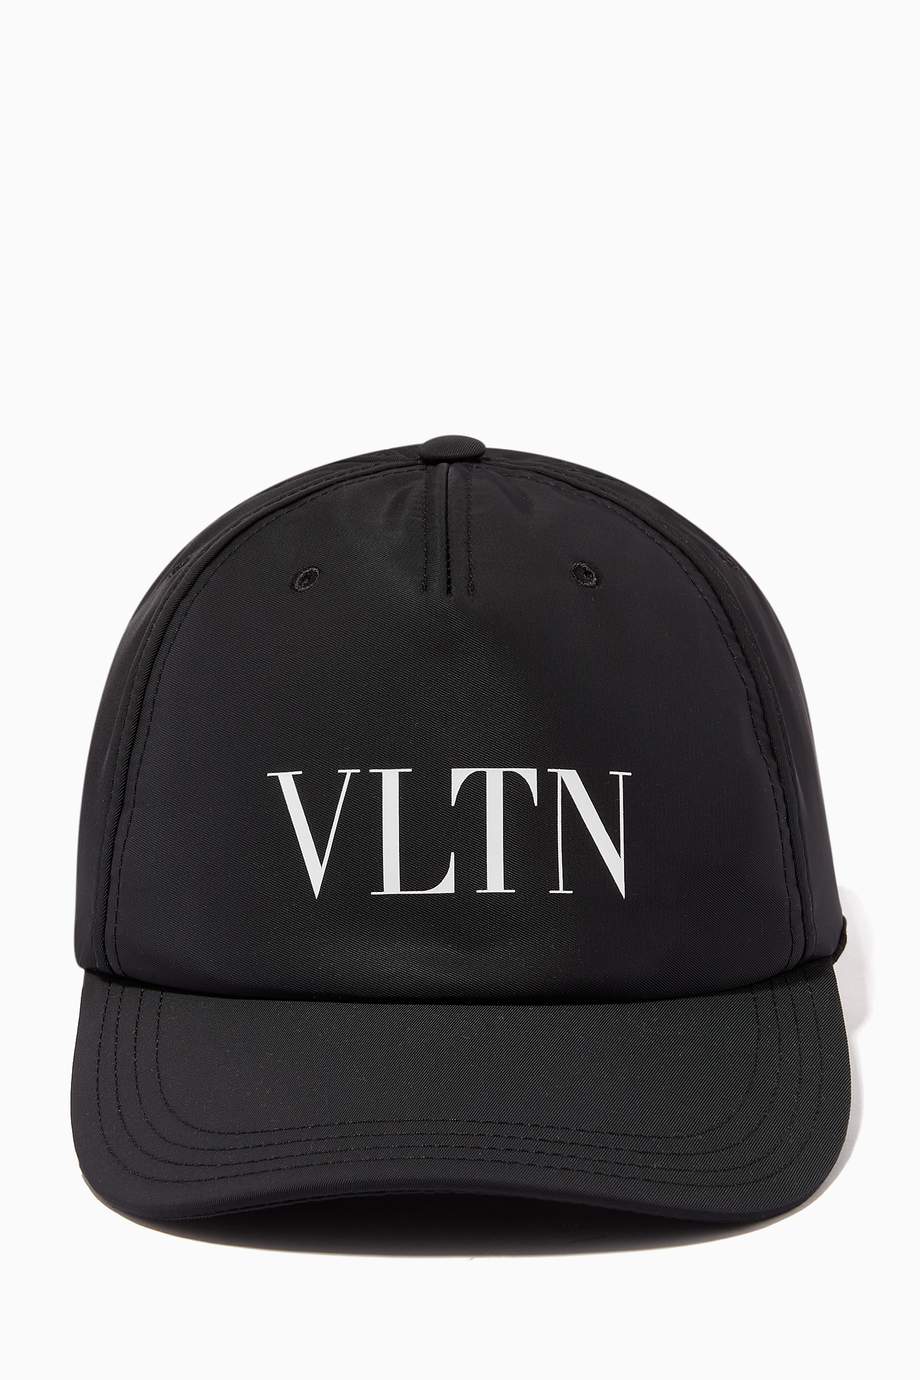 Shop Valentino Black Valentino Garavani VLTN Baseball Cap in Nylon for